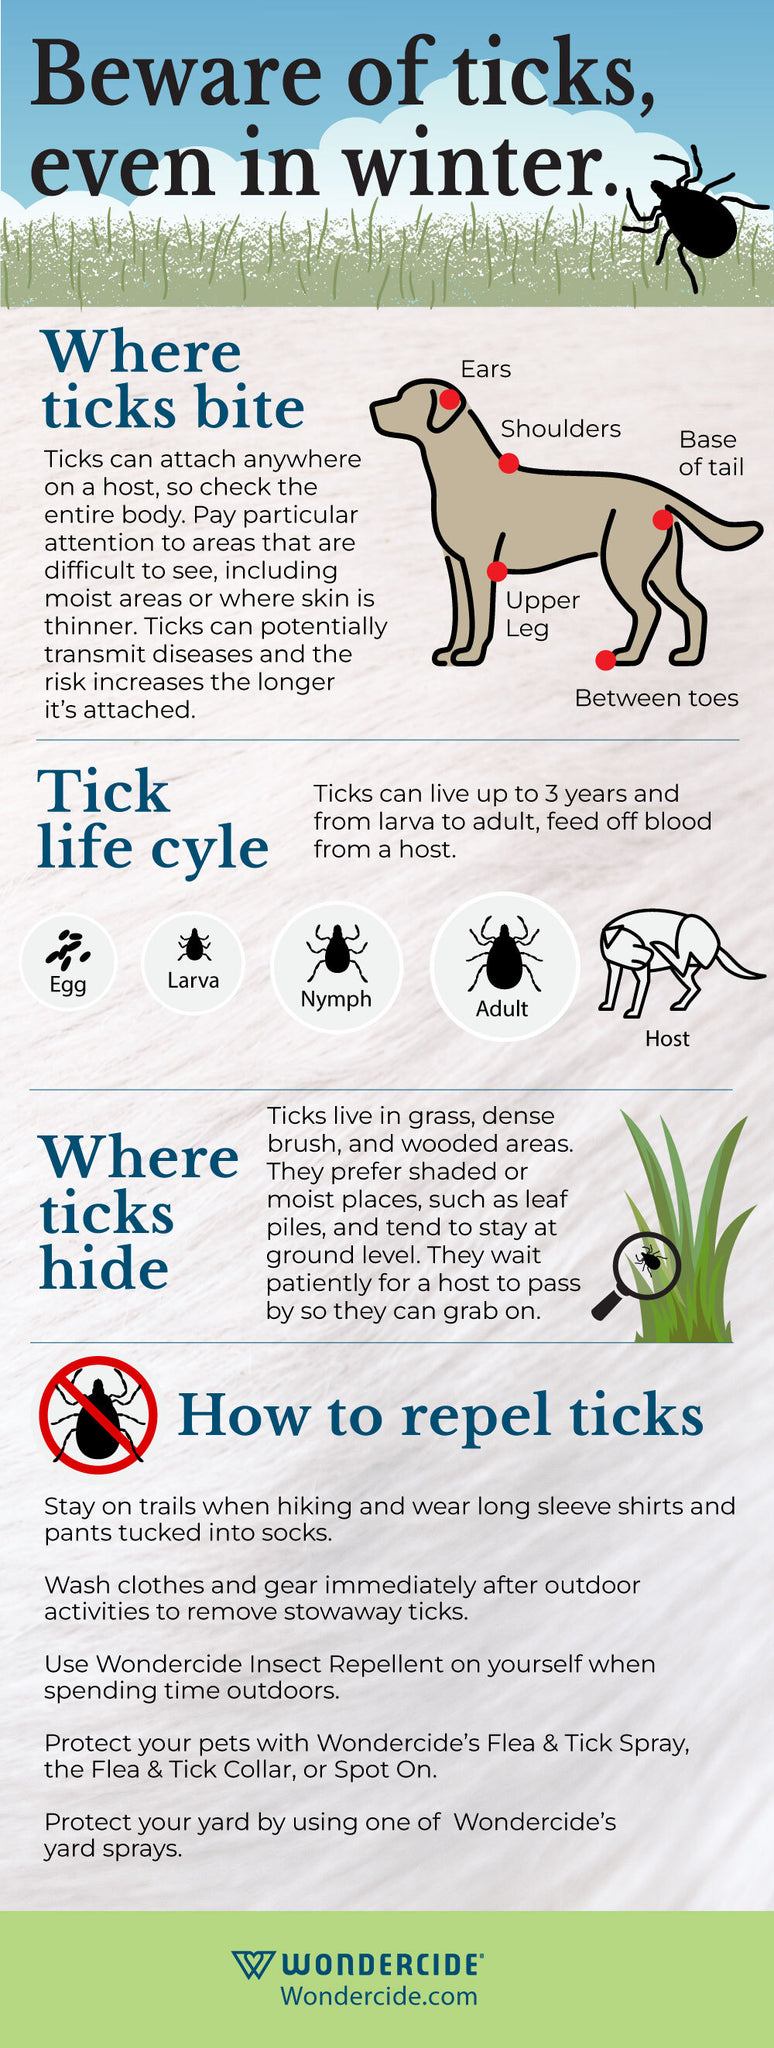 Ticks in winter infographic